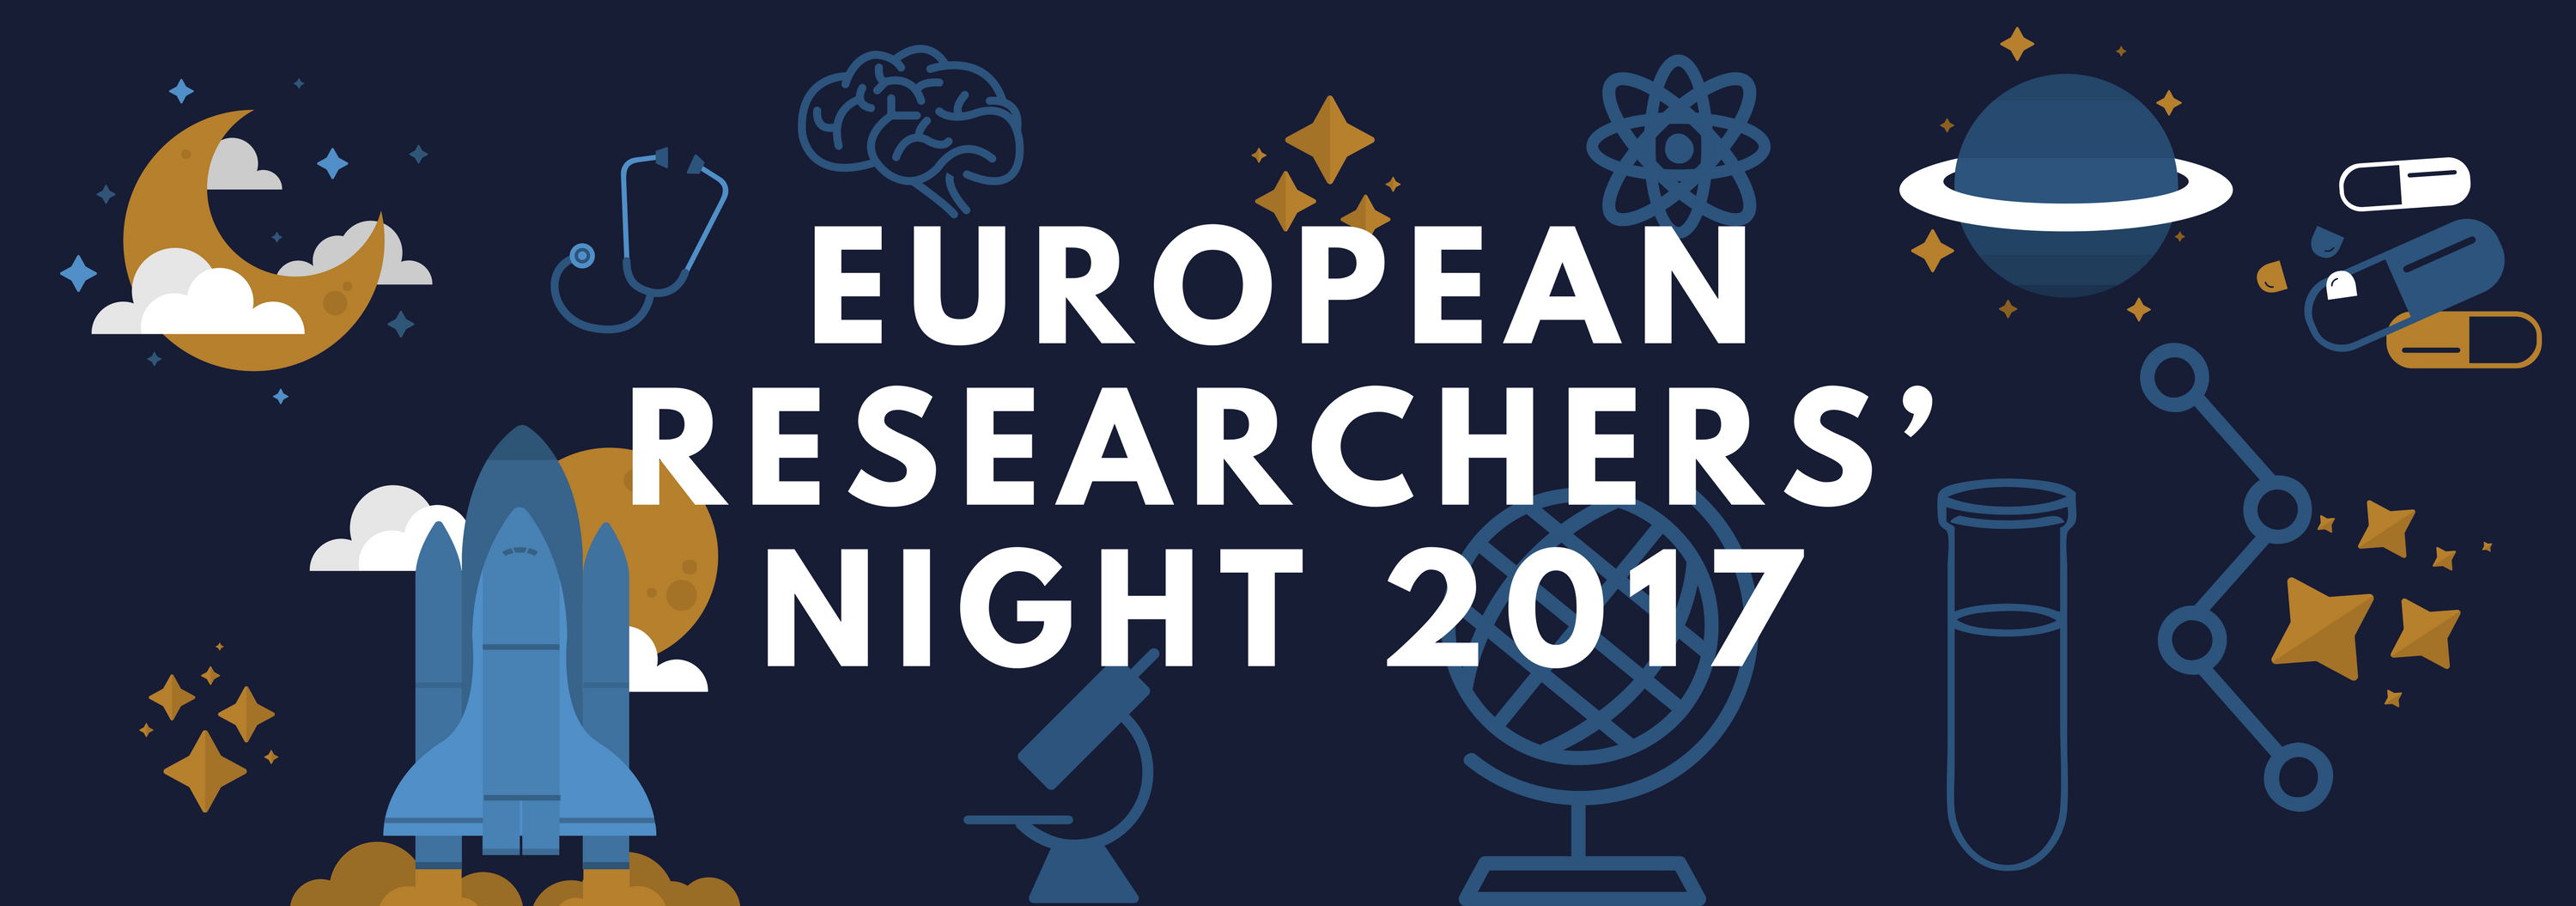 European Researchers’ Night 2017 header